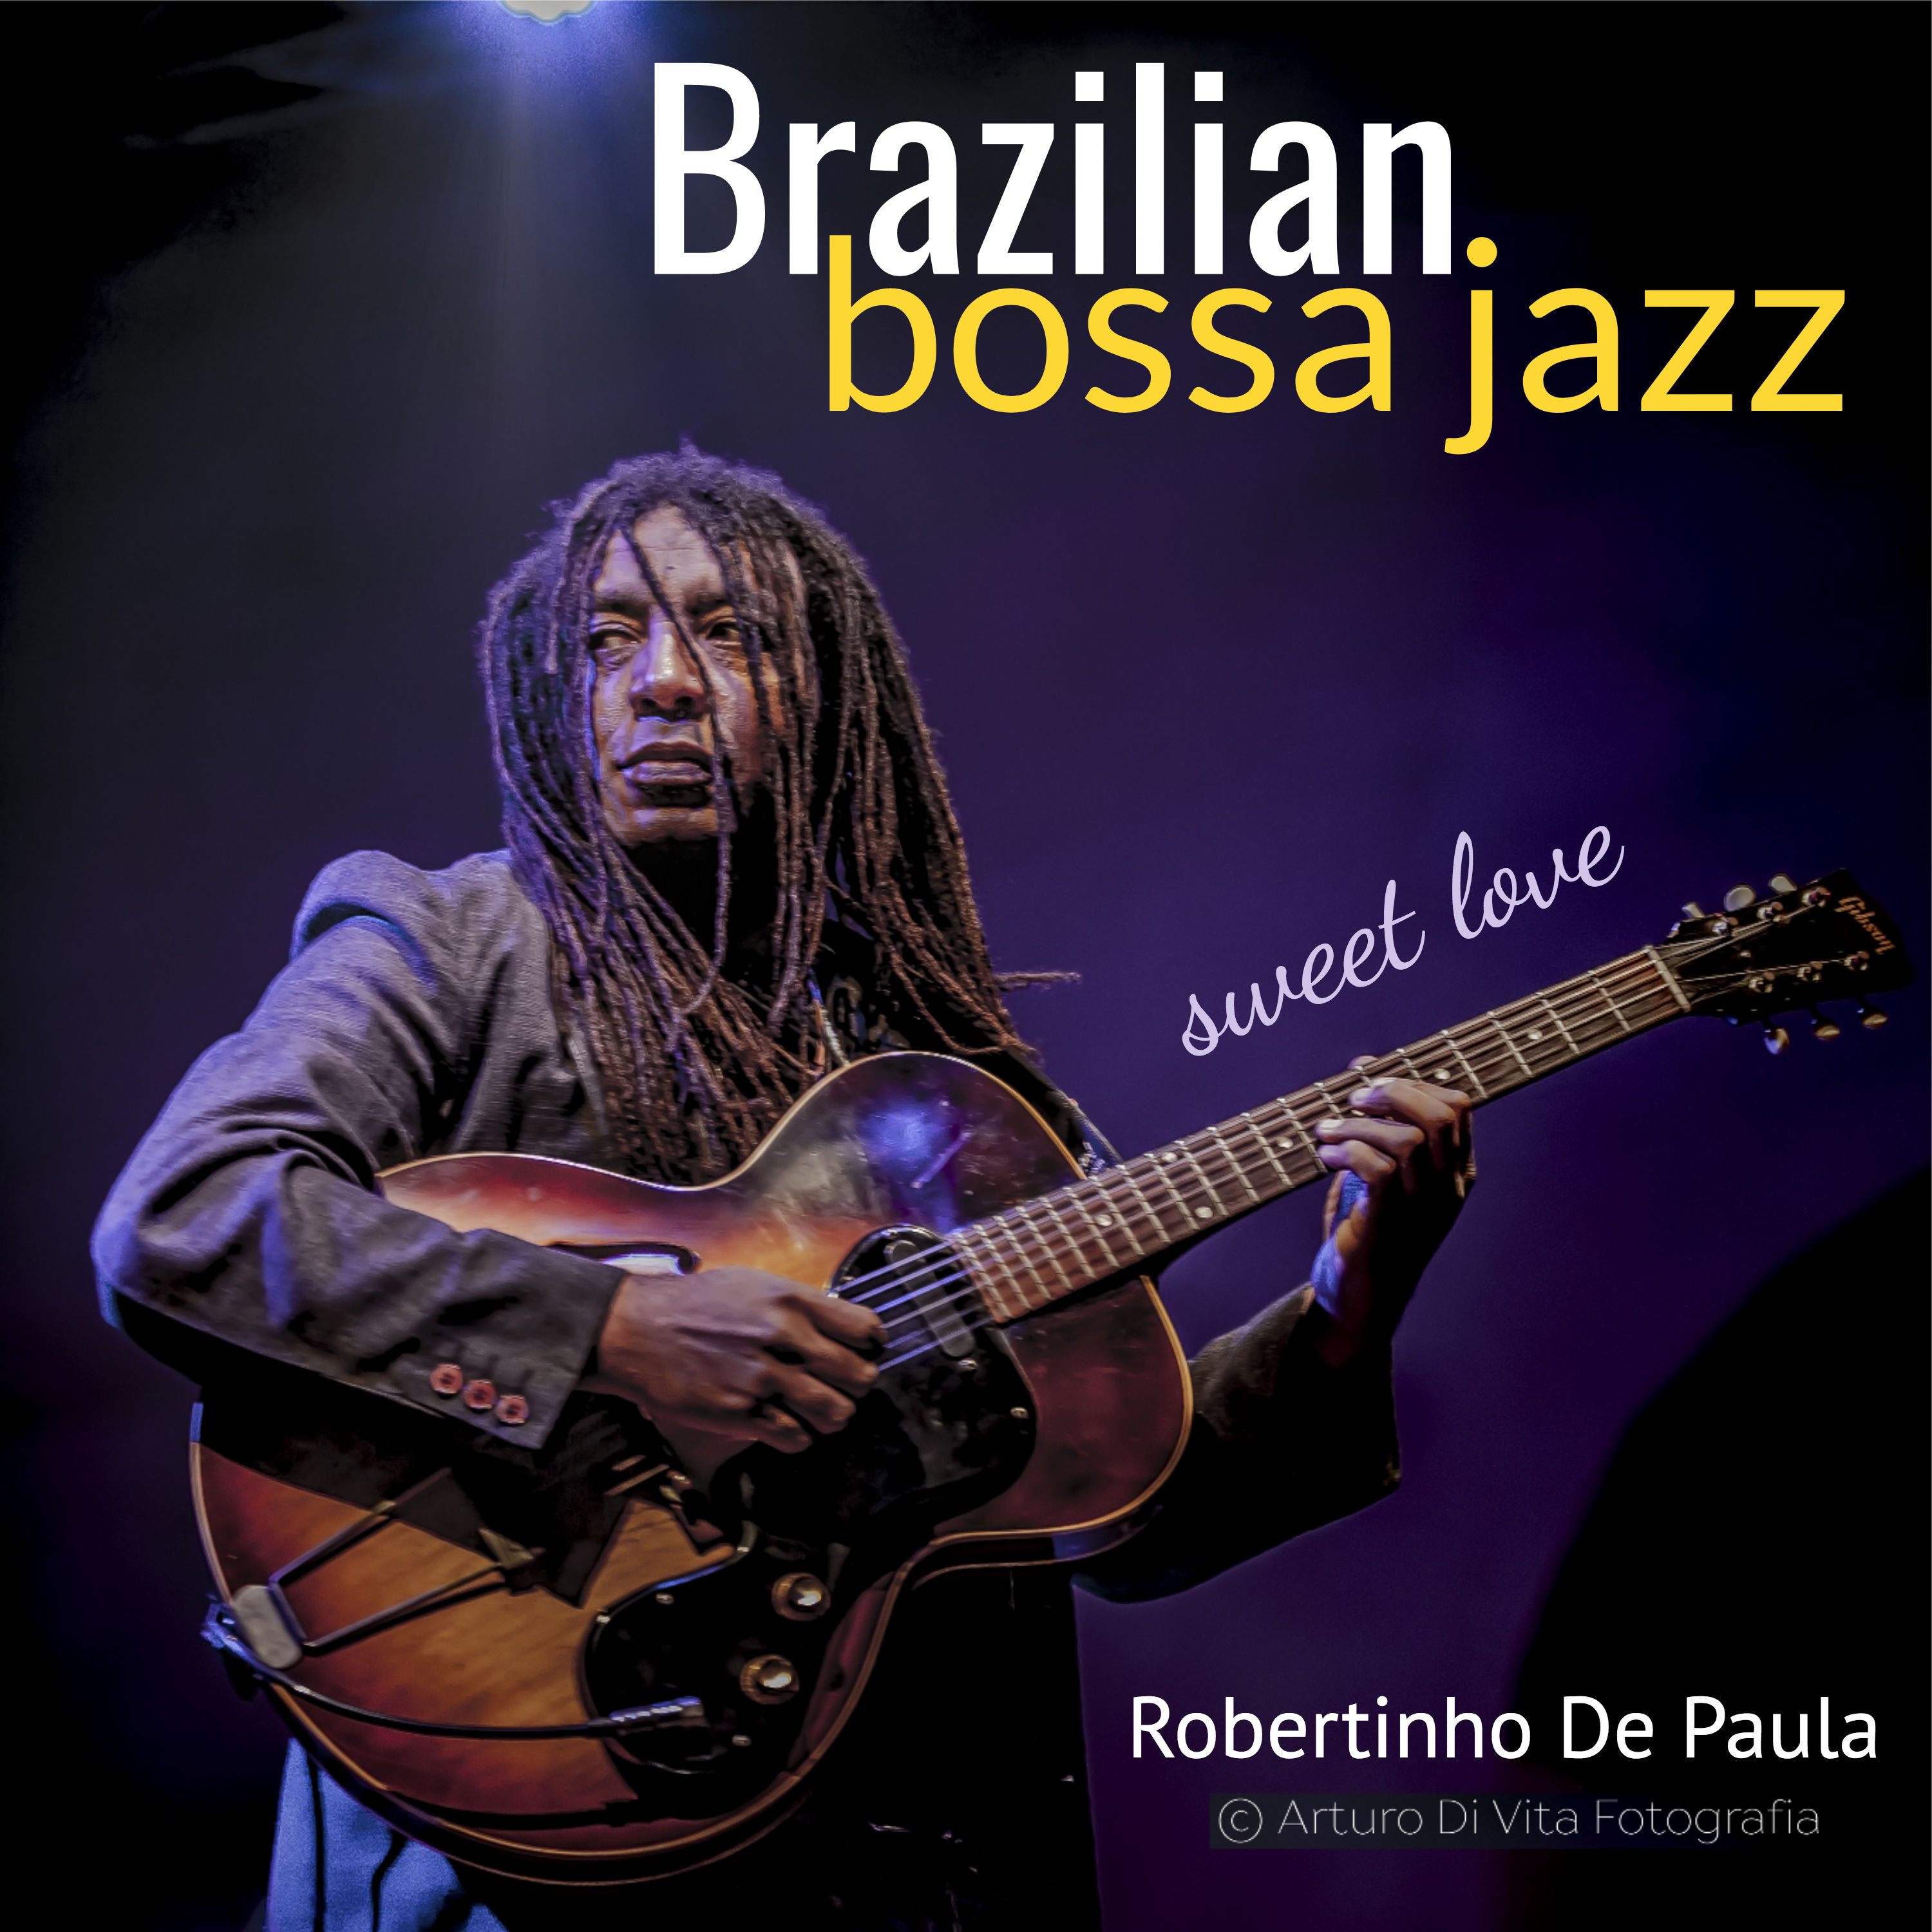 Robertinho De Paula - Brazilian Bossa Jazz: Sweet Love (2020) [FLAC 24bit/96kHz]